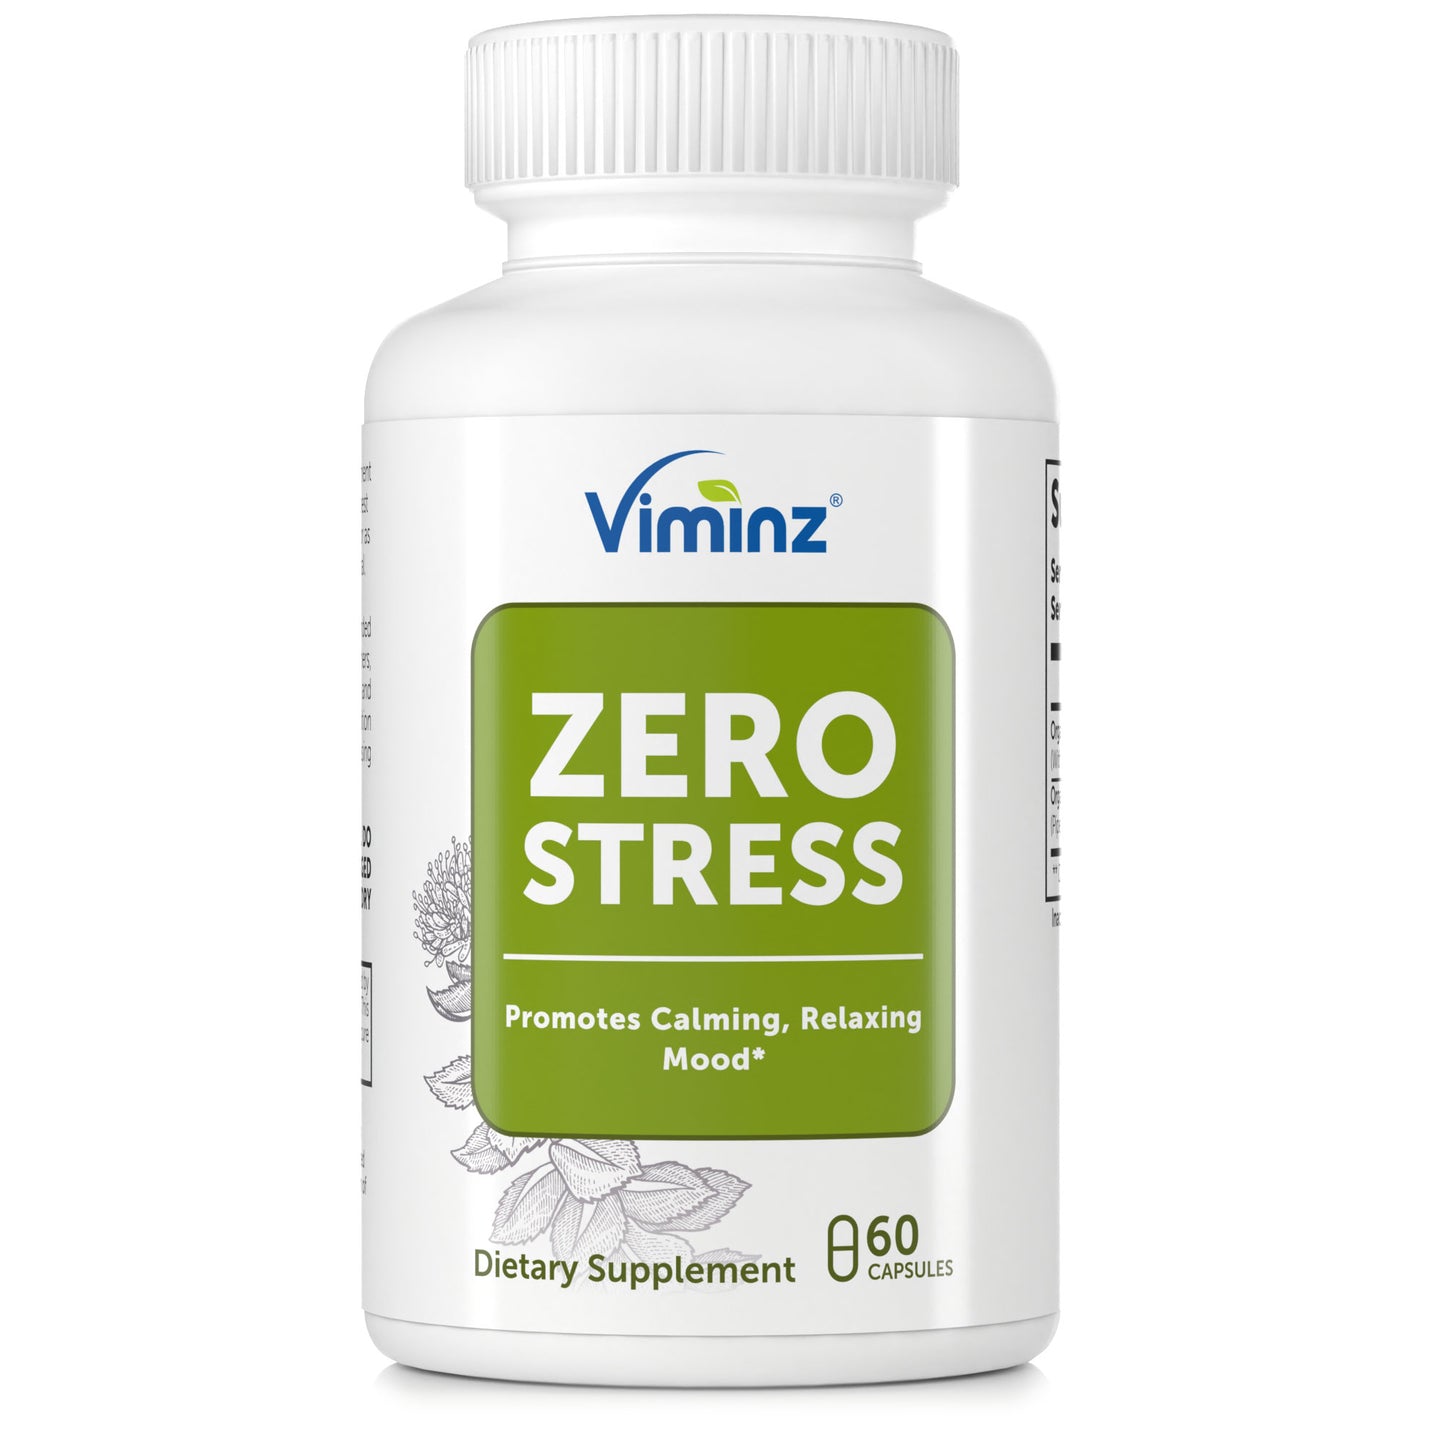 ZERO STRESS - Promotes Calming, Relaxing Mood* - 60 Capsules